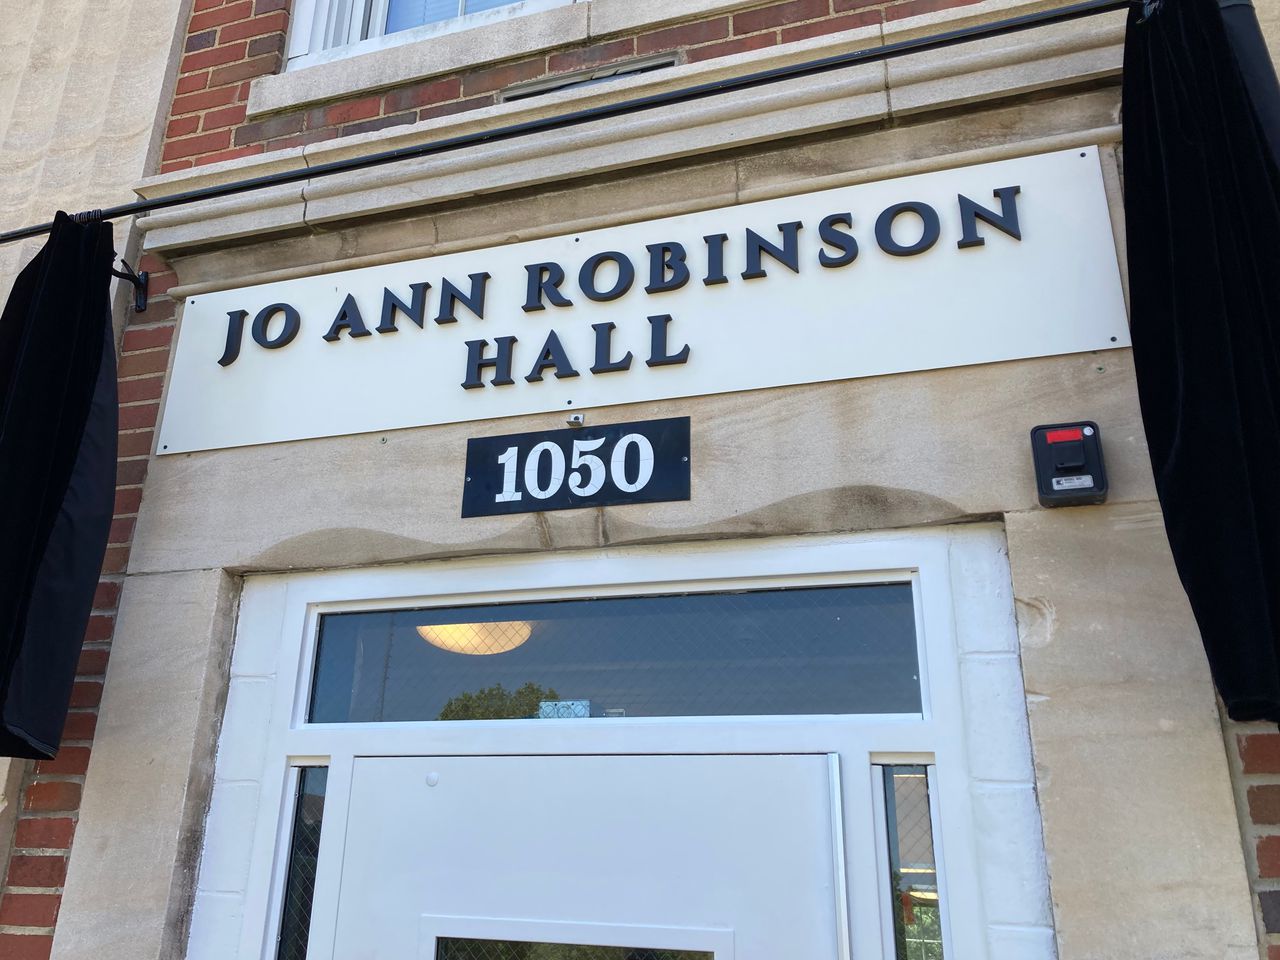 Jo Ann Robinson Hall